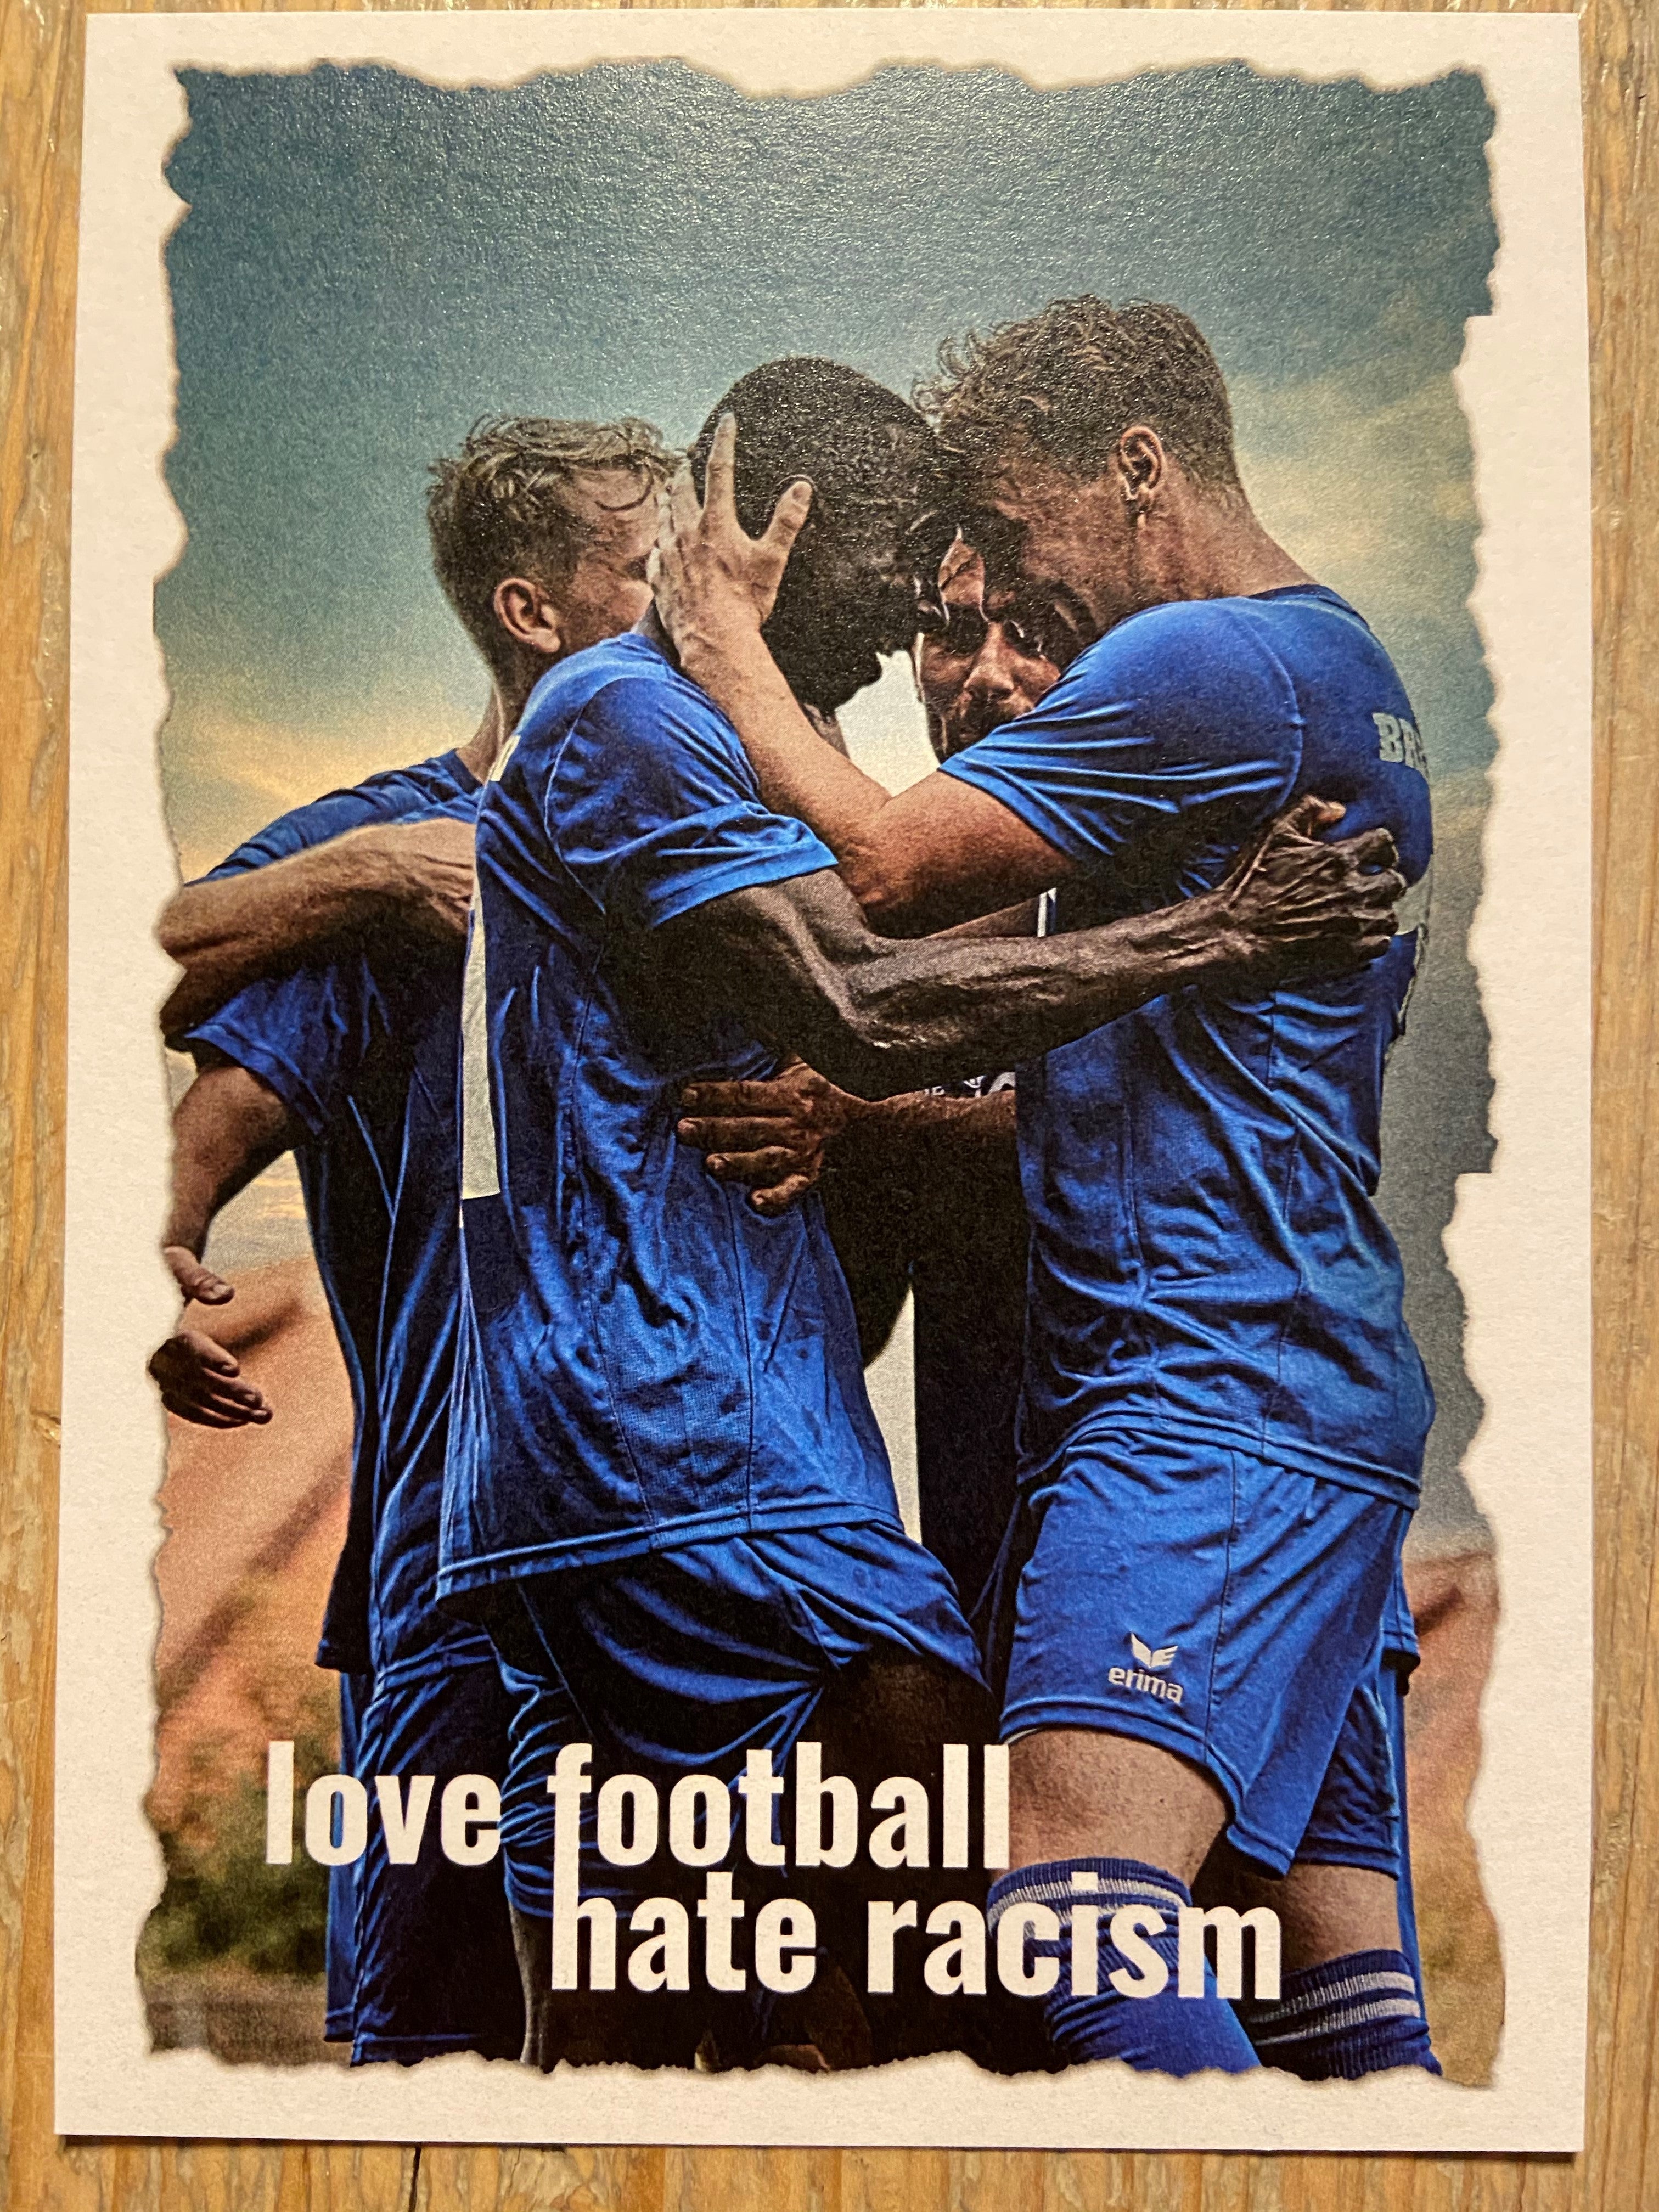 BSV-Postkarte "Love football, hate racism" (Edition #4)